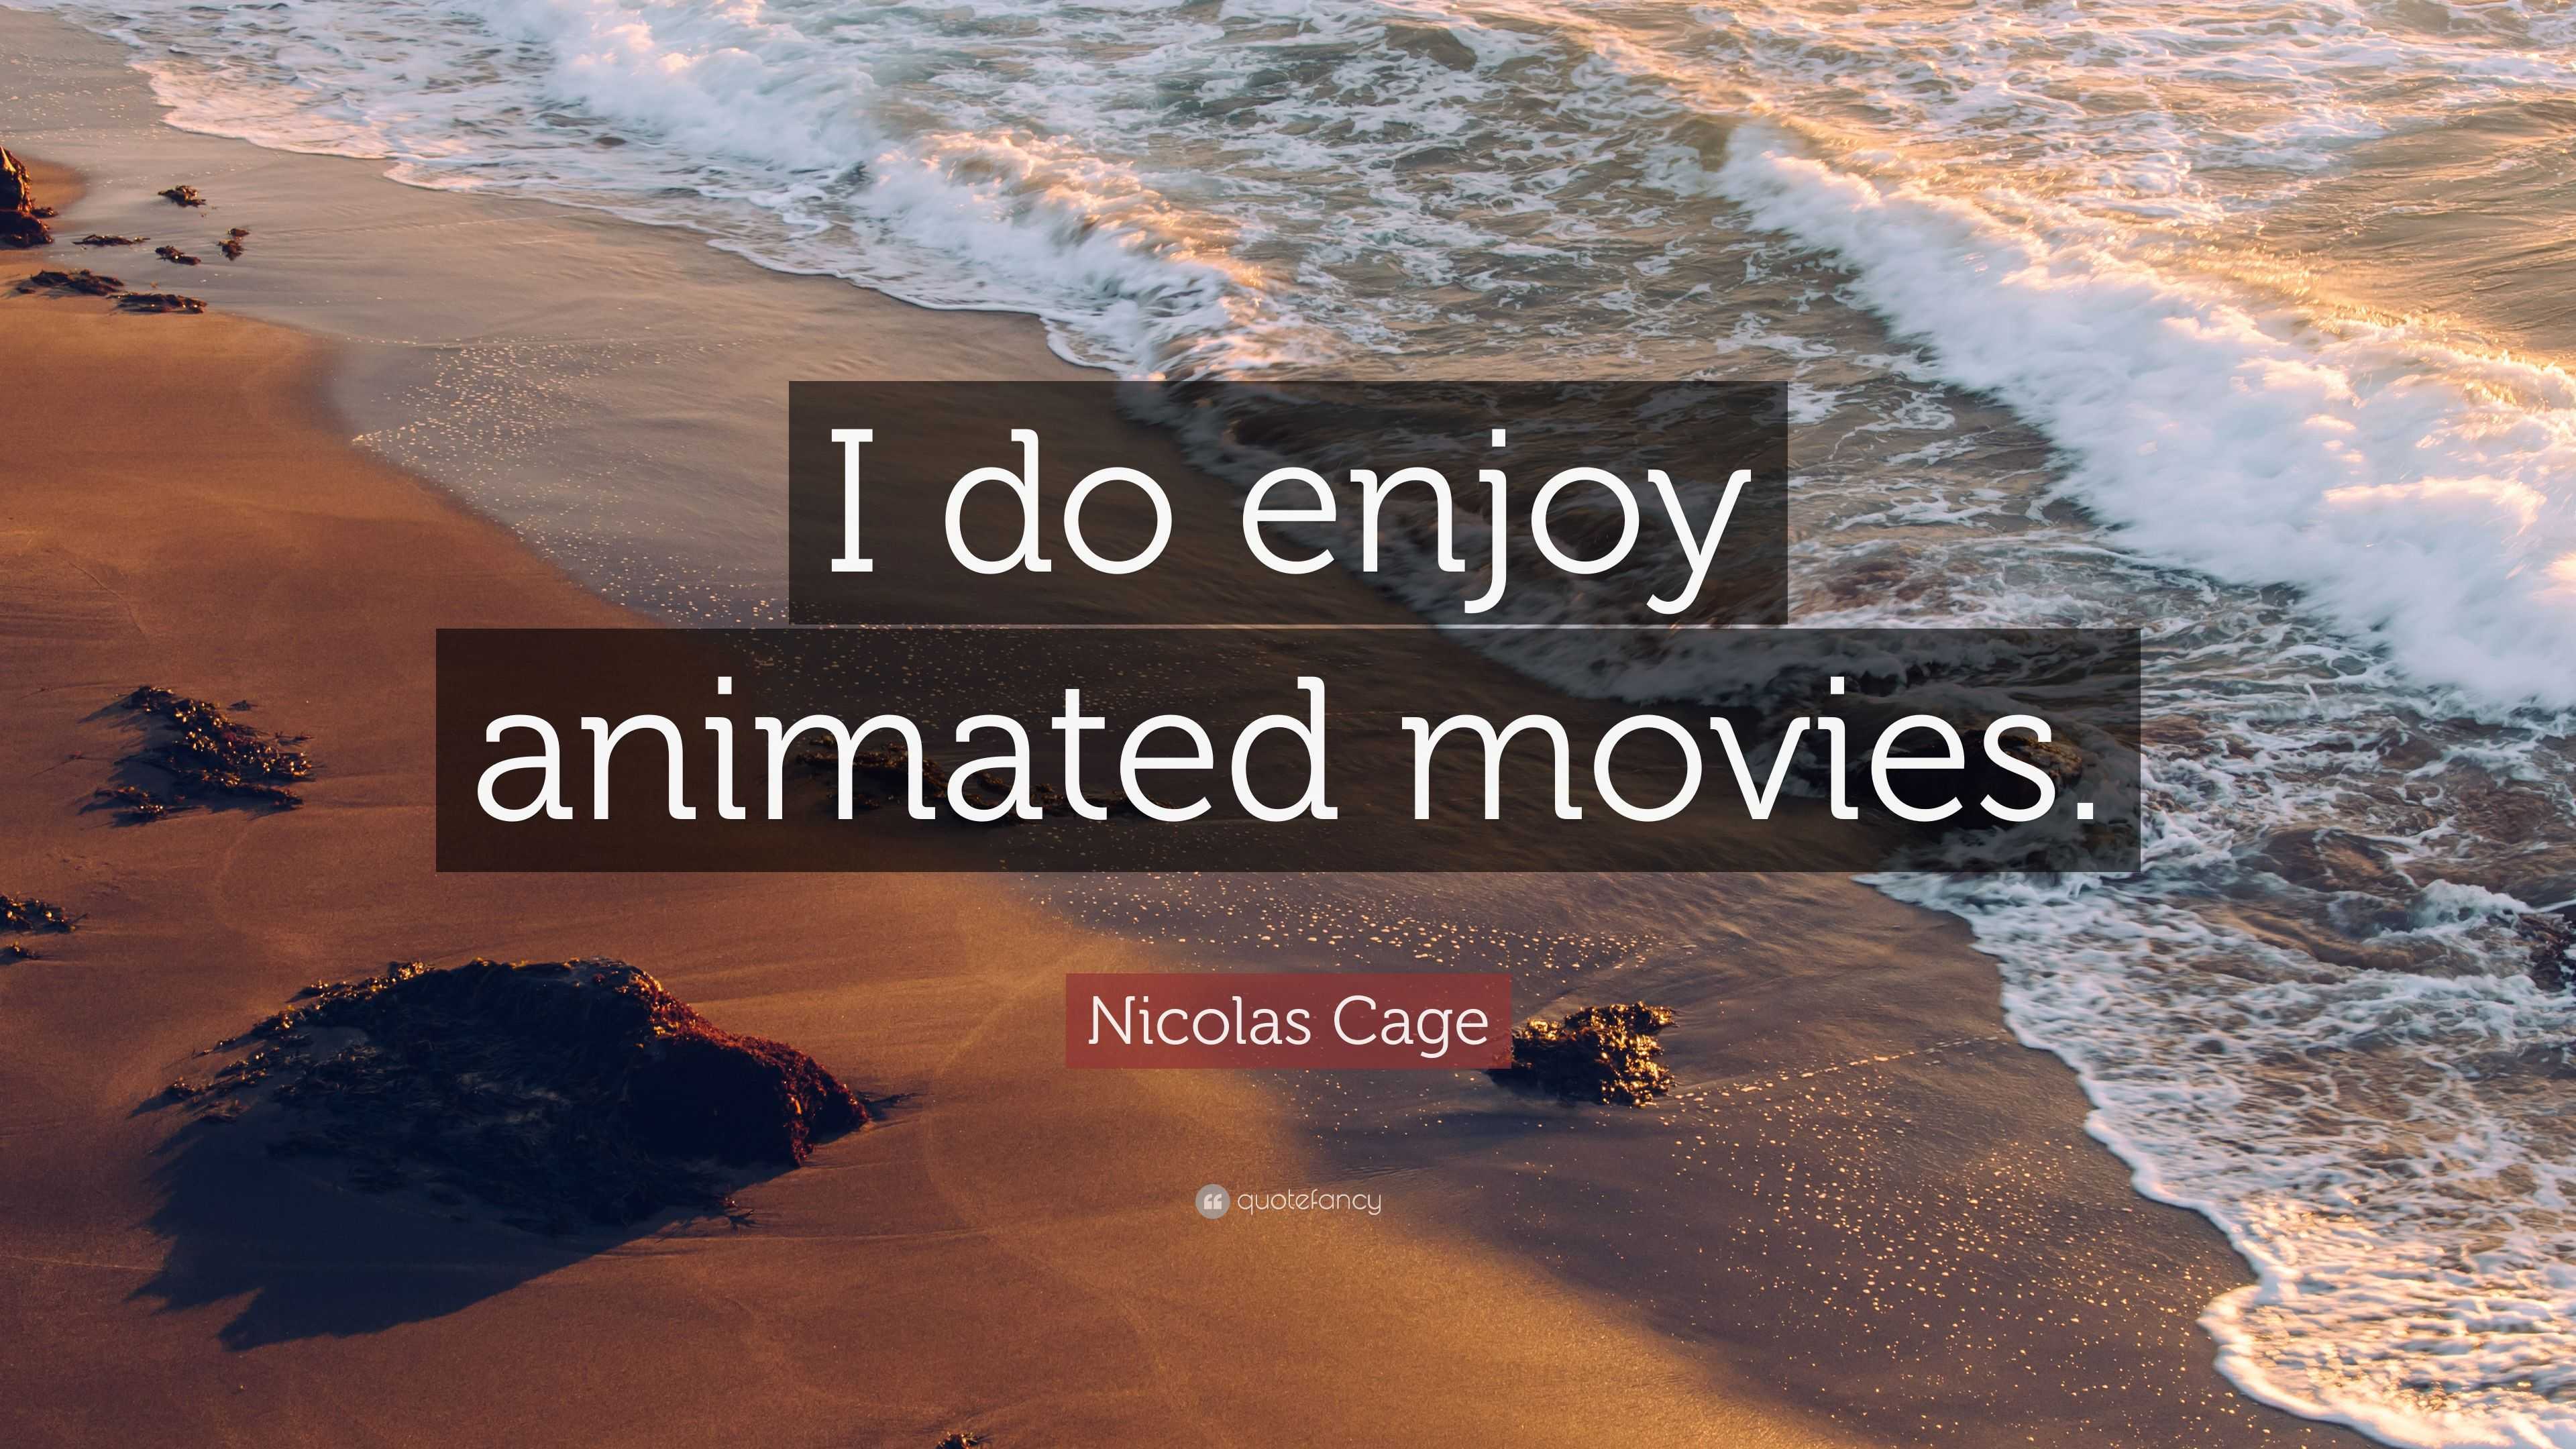 Nicolas Cage Quote: “I do enjoy animated movies.”